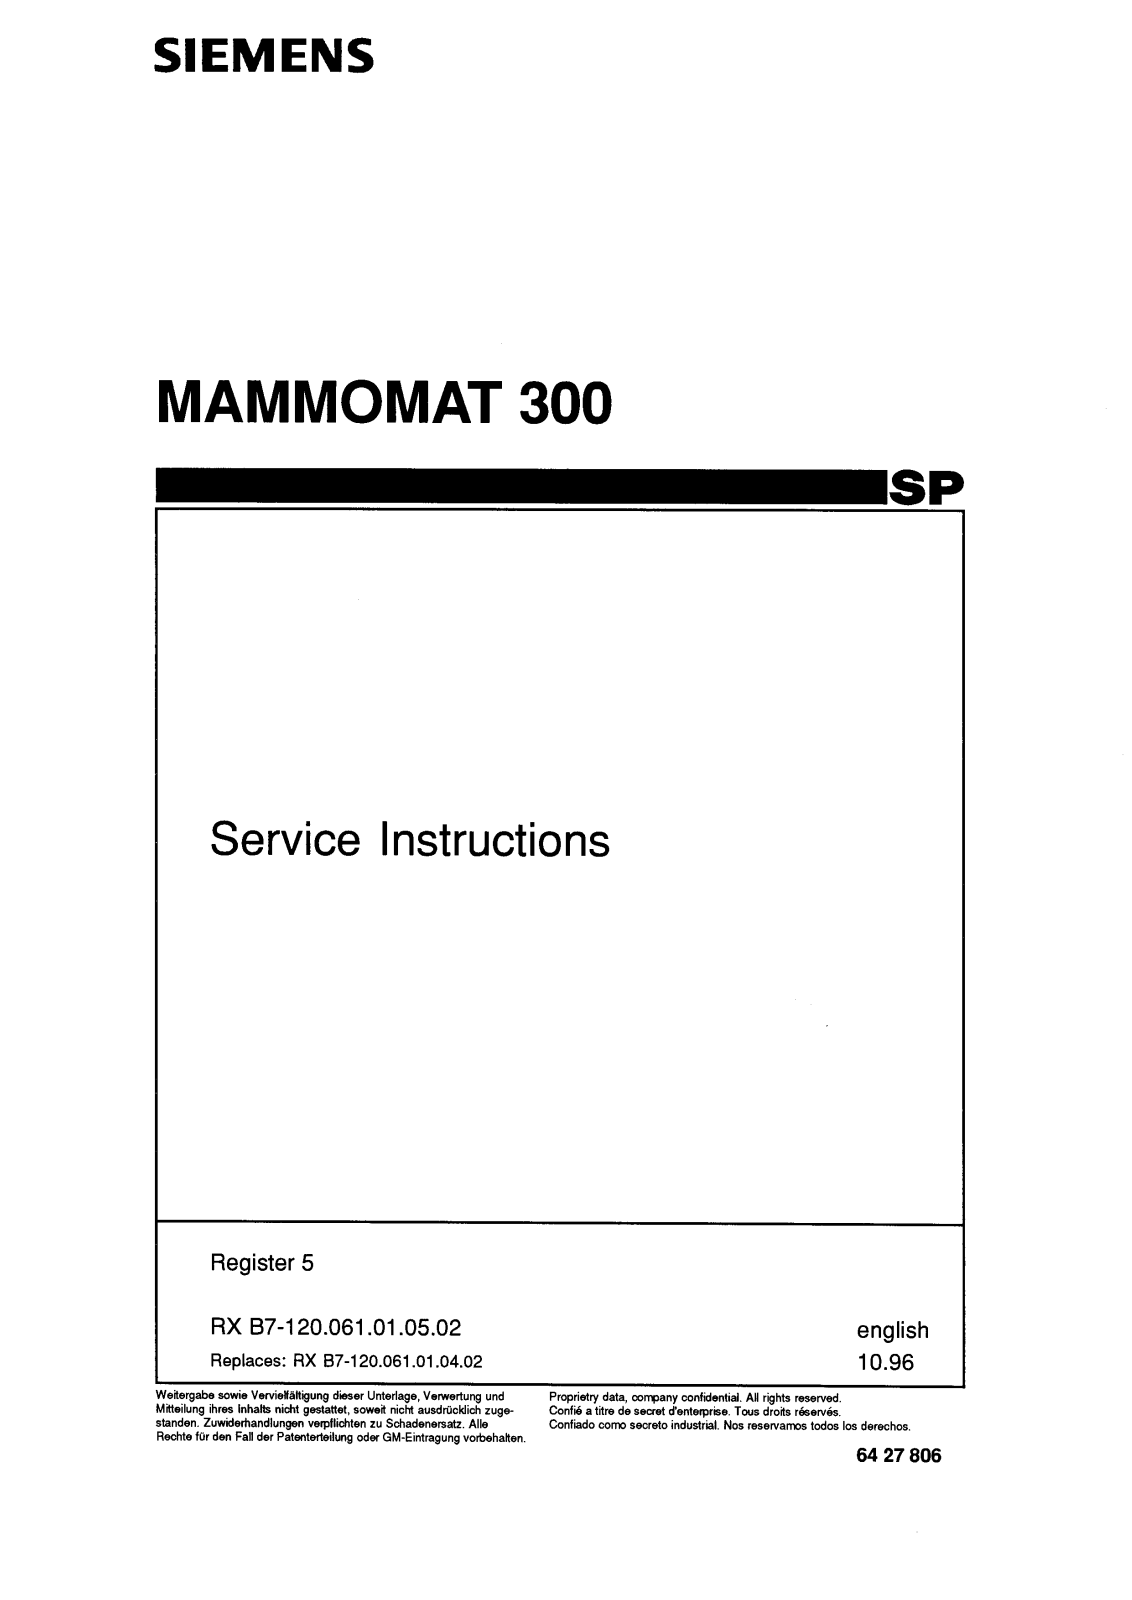 Siemens Mammomat 300 Service manual